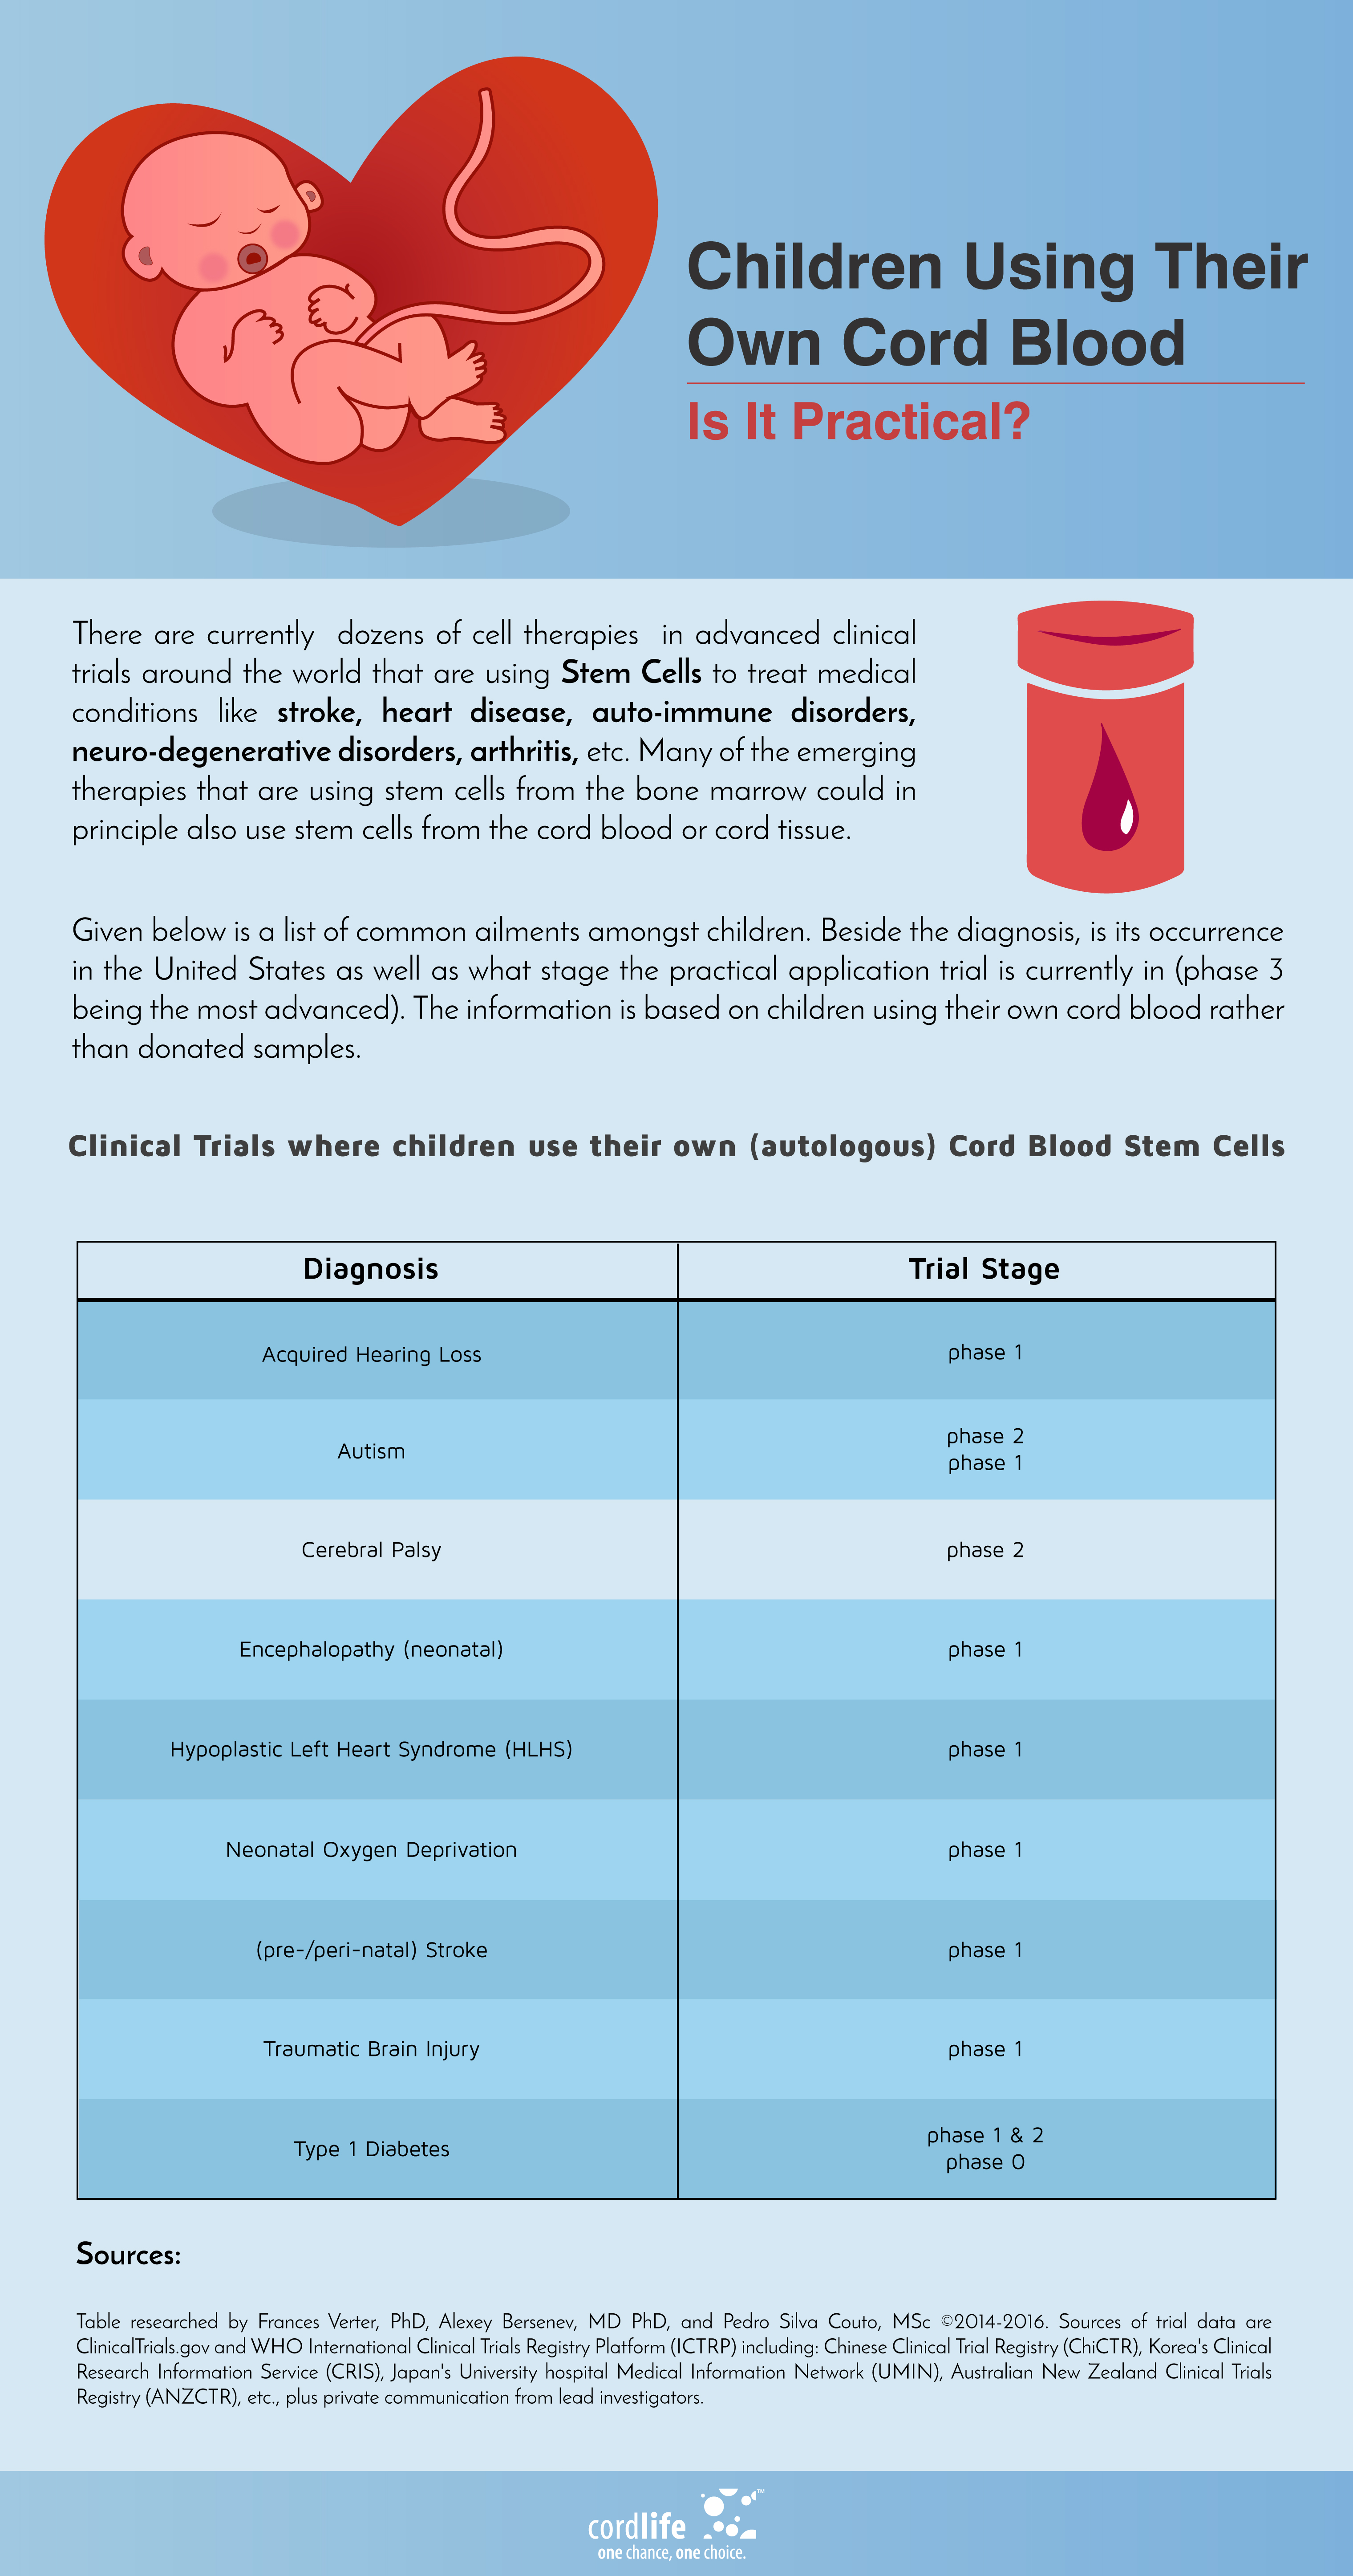 Children using their own Cord Blood